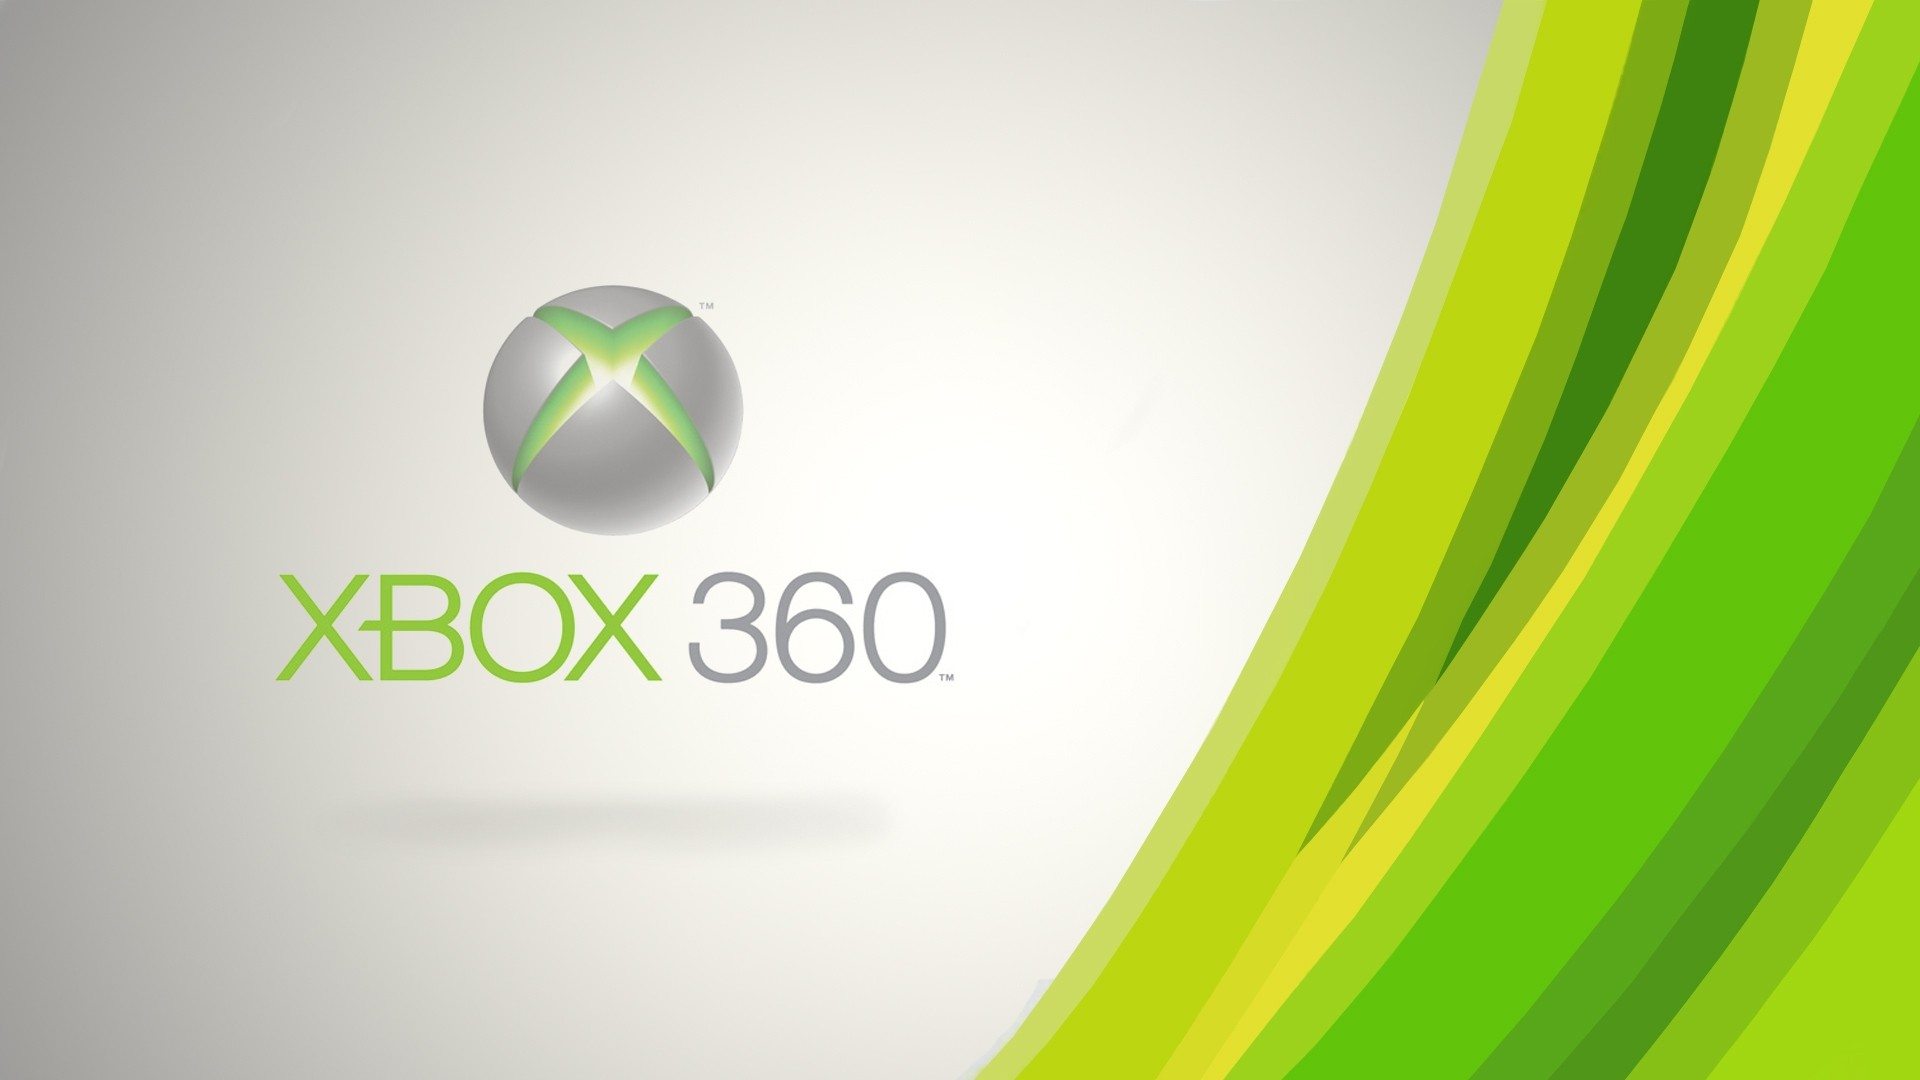  201307Videoole Xbox 360 360 Box Fresh New Hd Wallpaper jpg